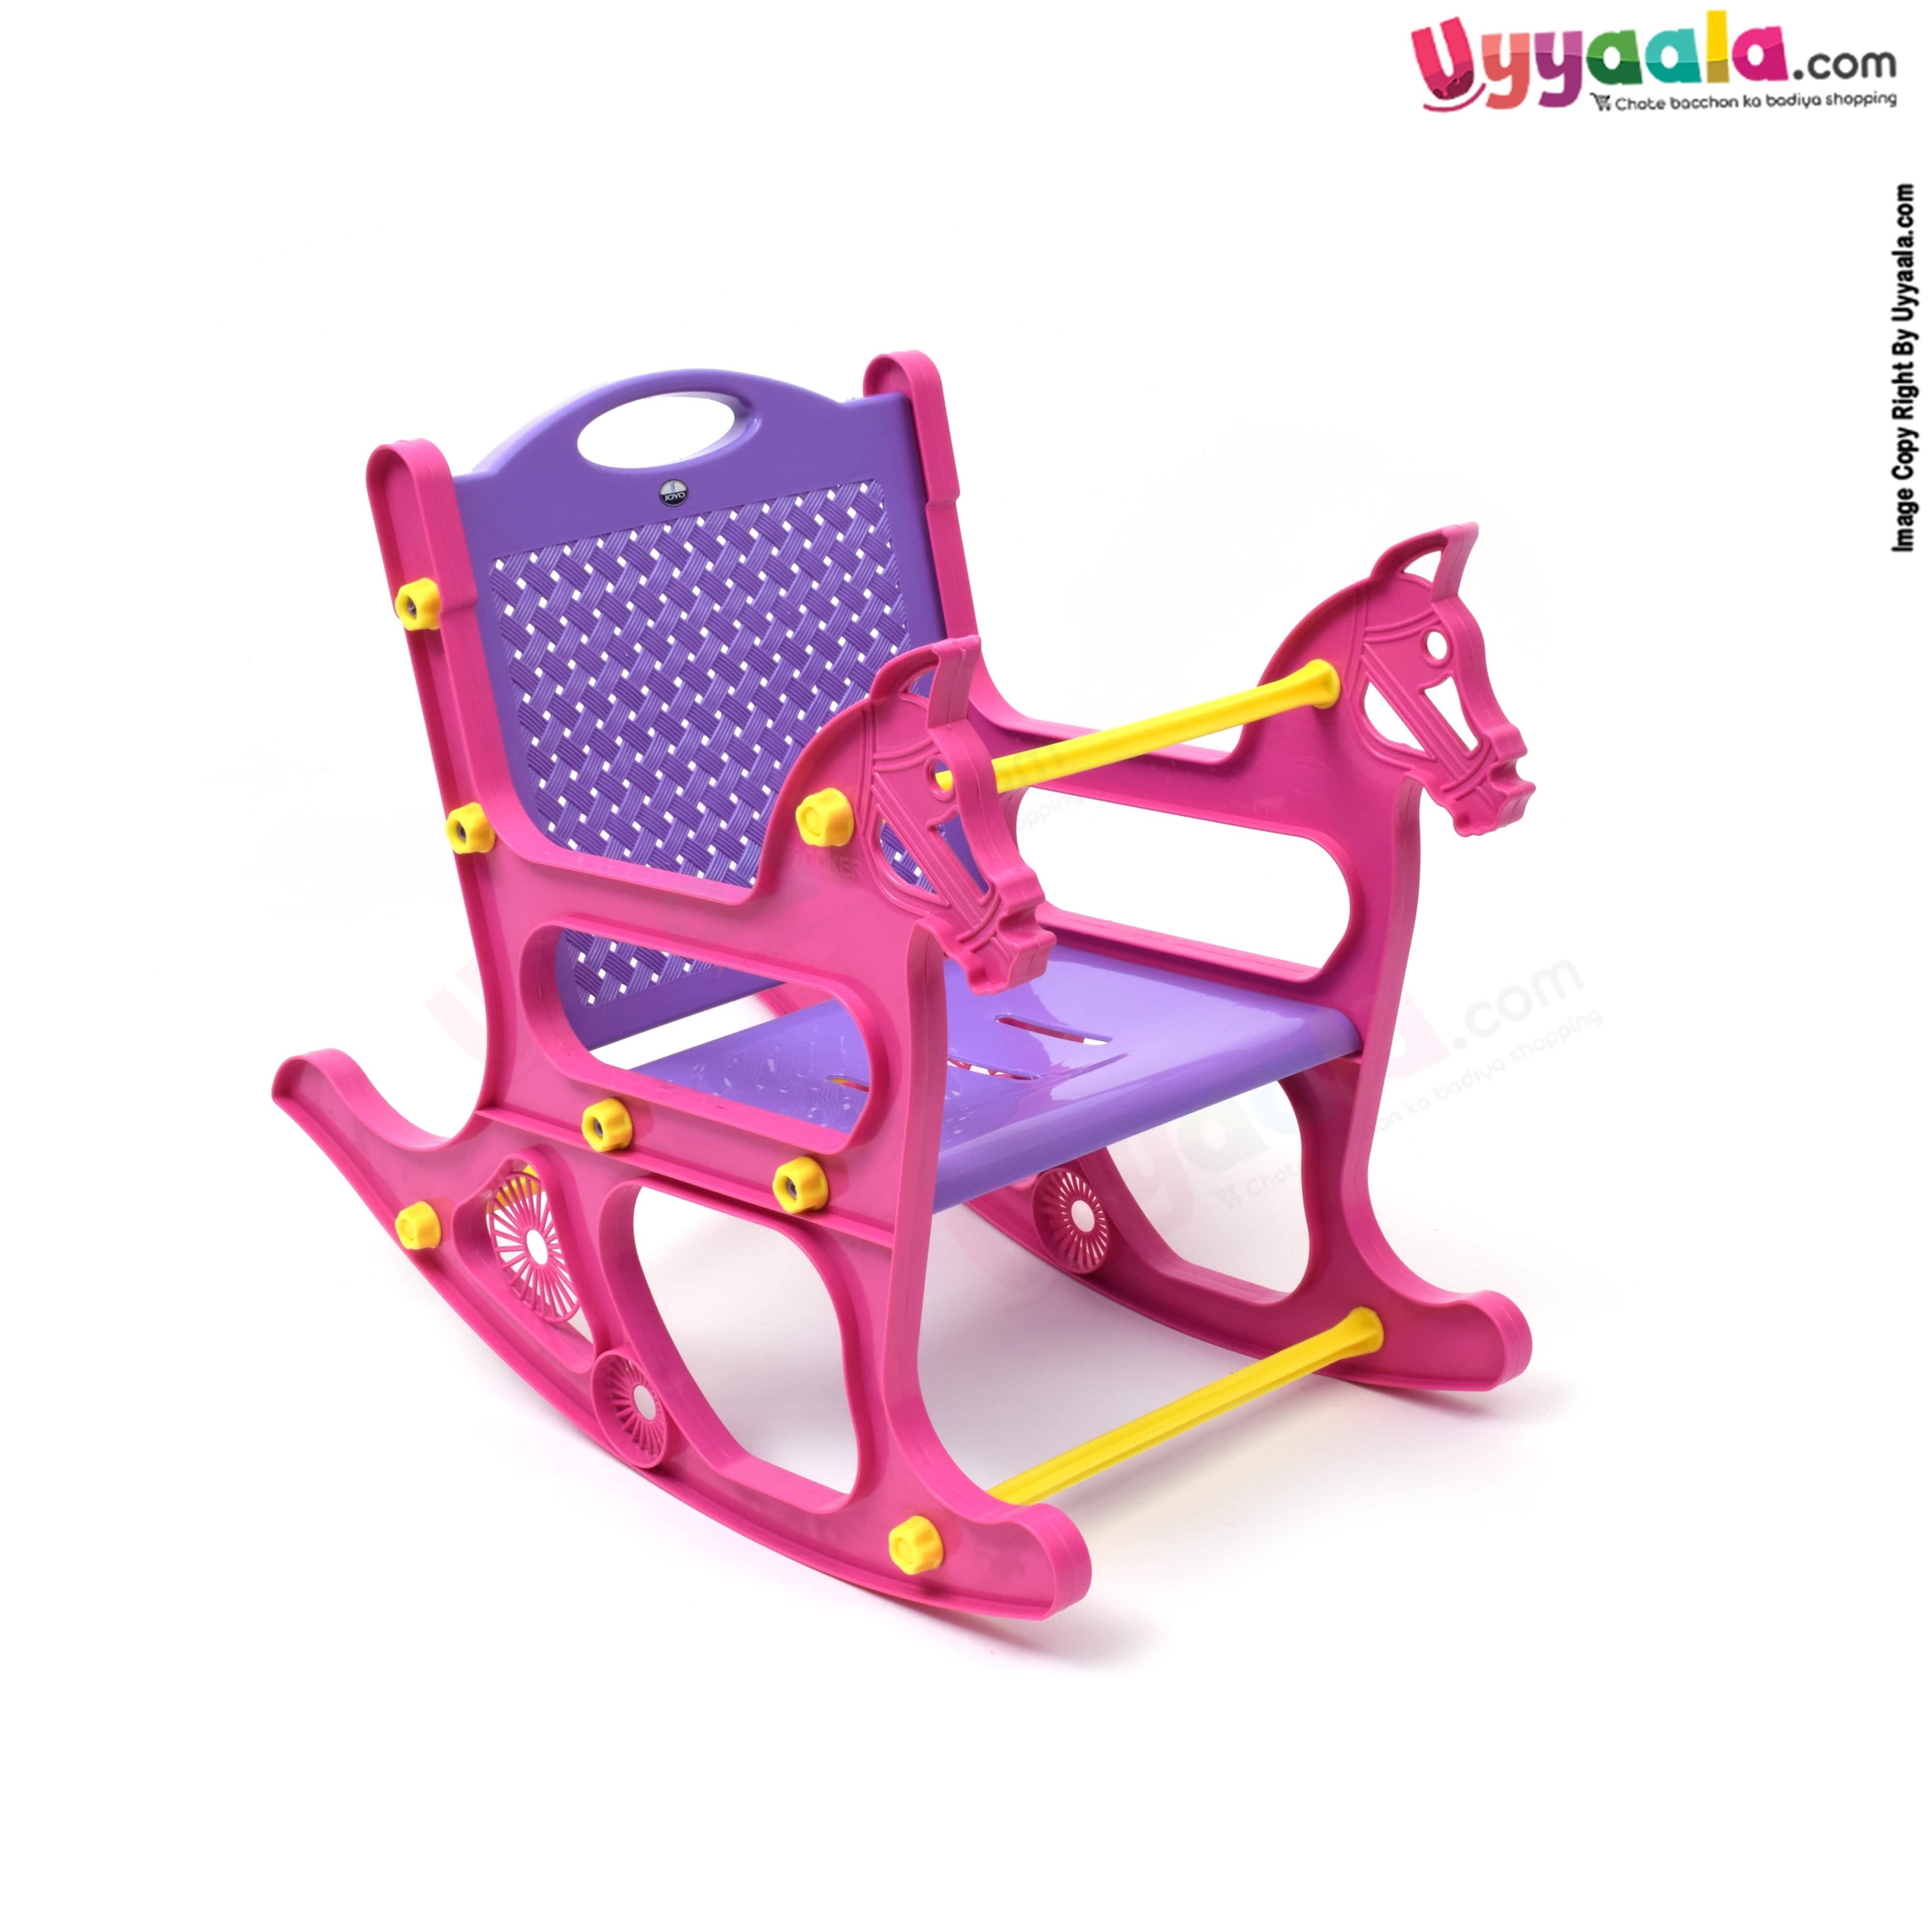 JOYO rocking horse chair for babies 6m+